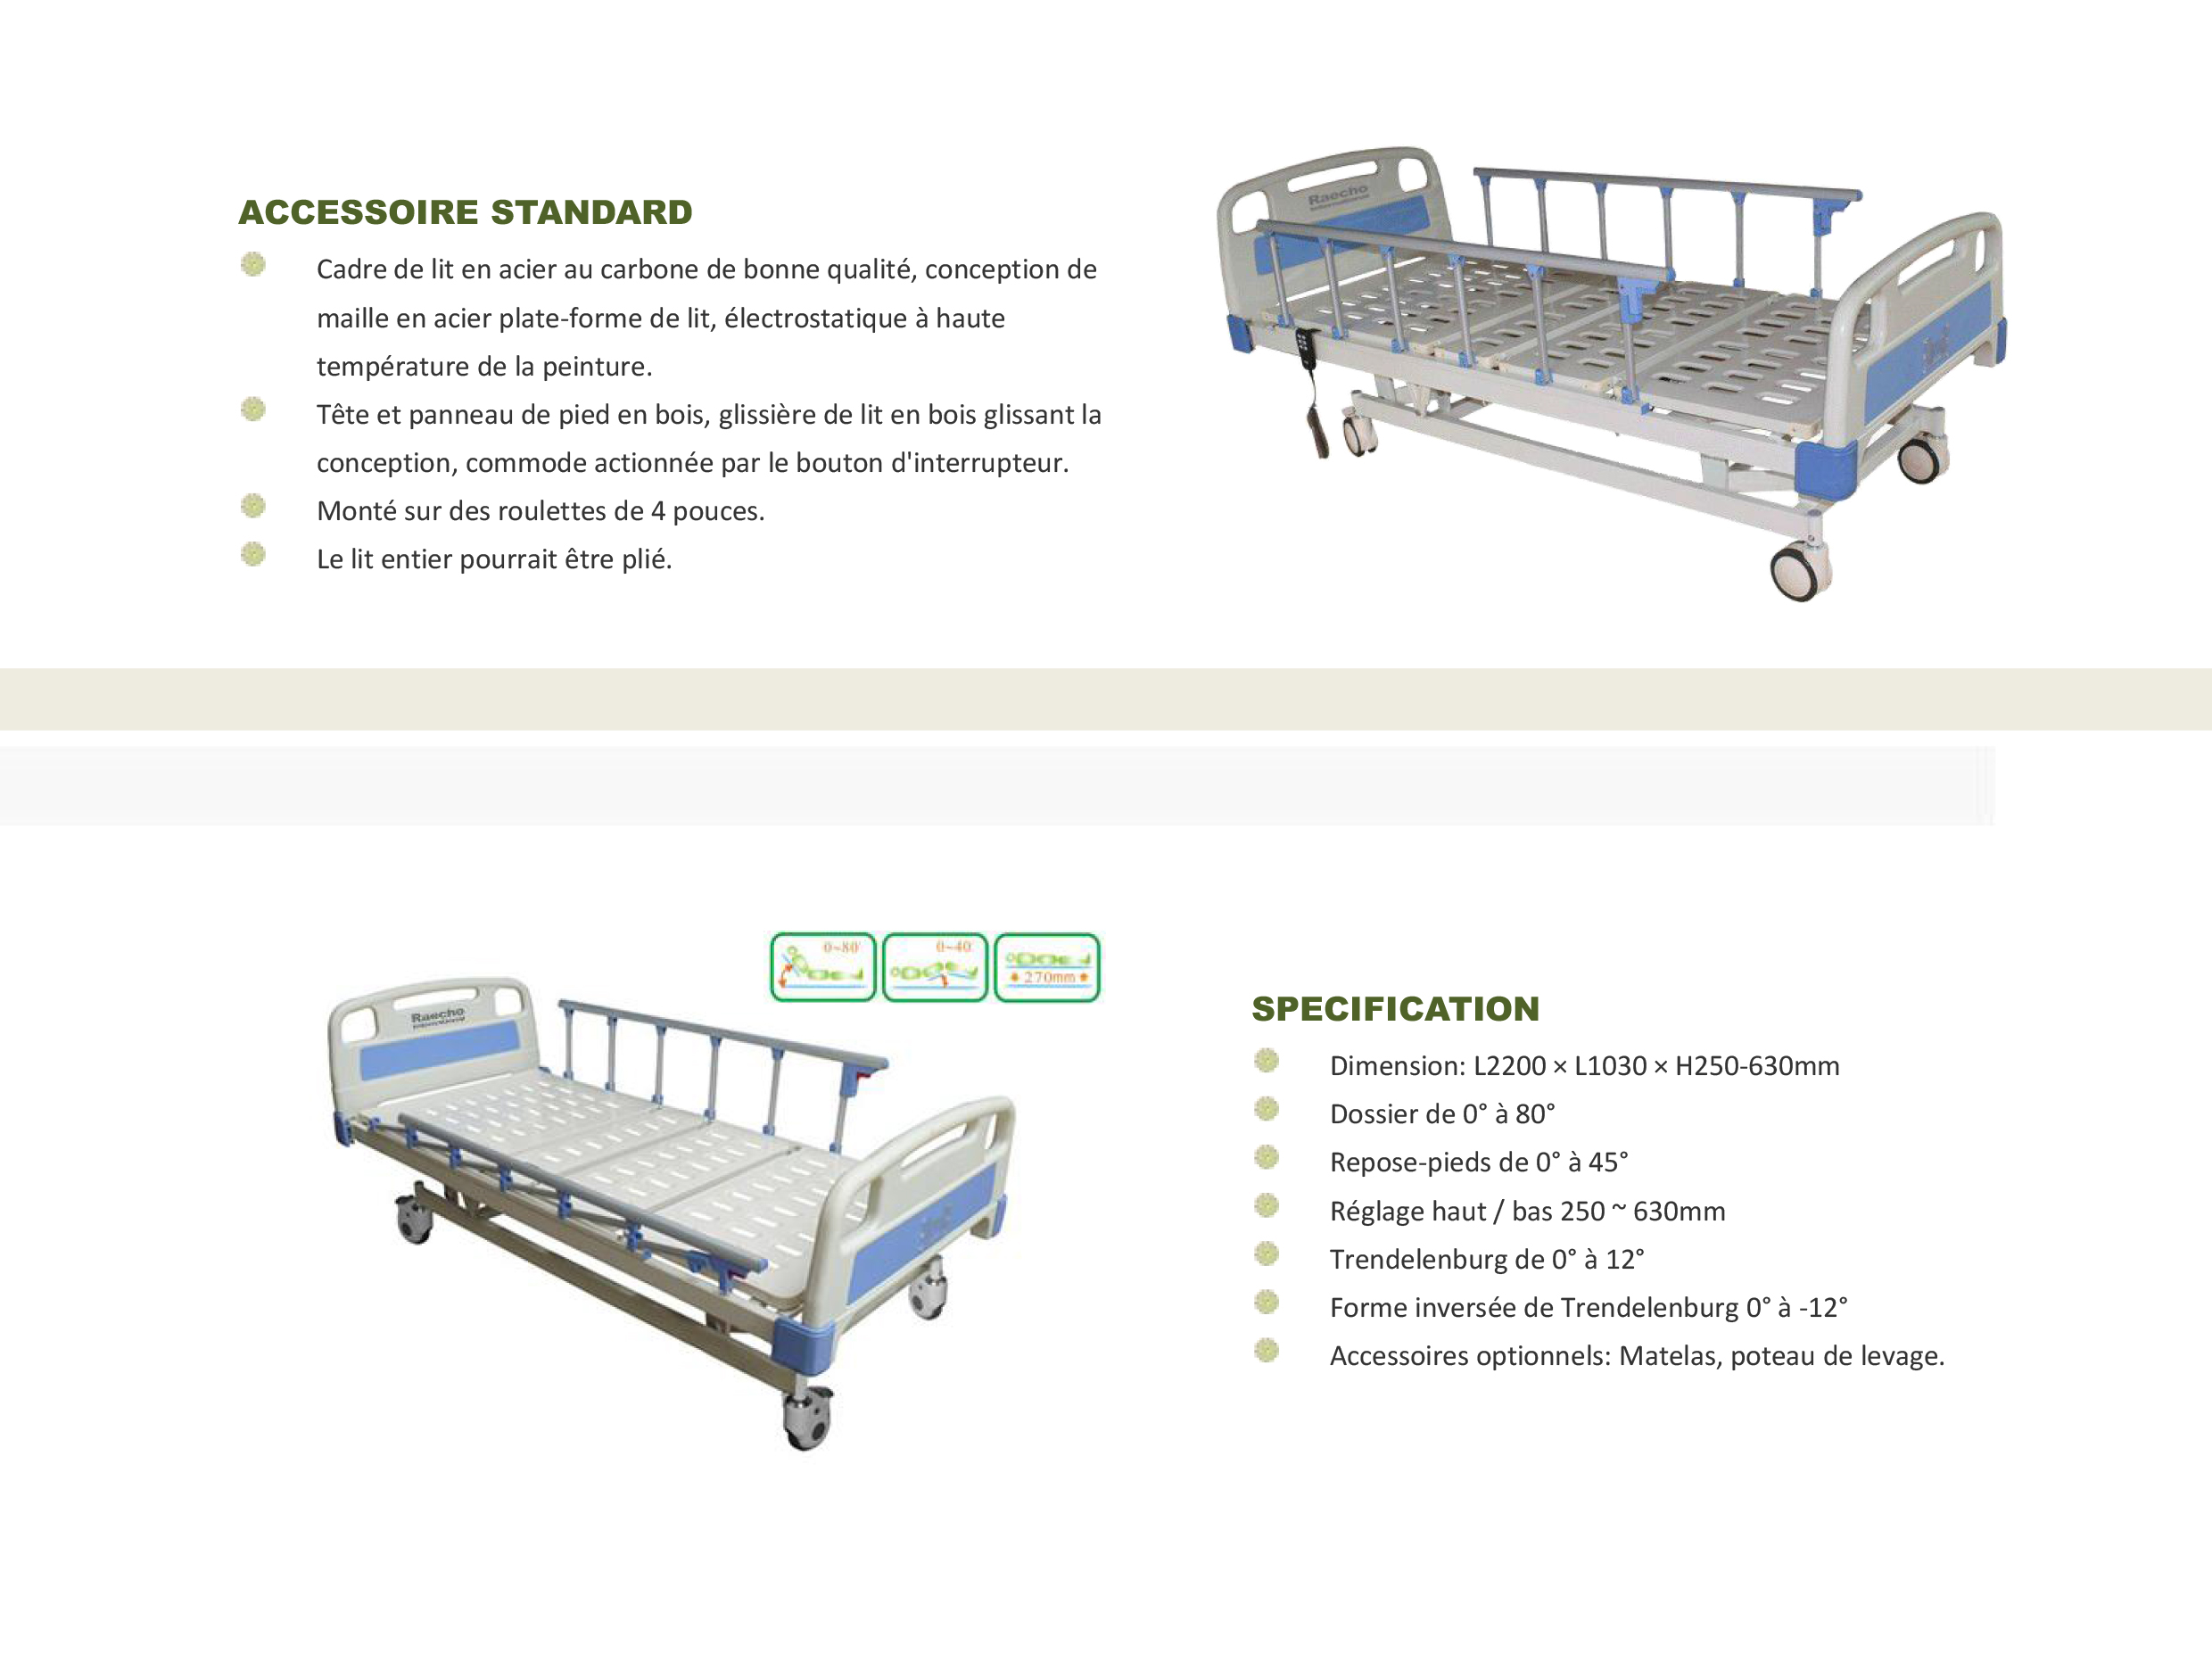 Raecho-Electric Three-function Hospital Bed-1.jpg